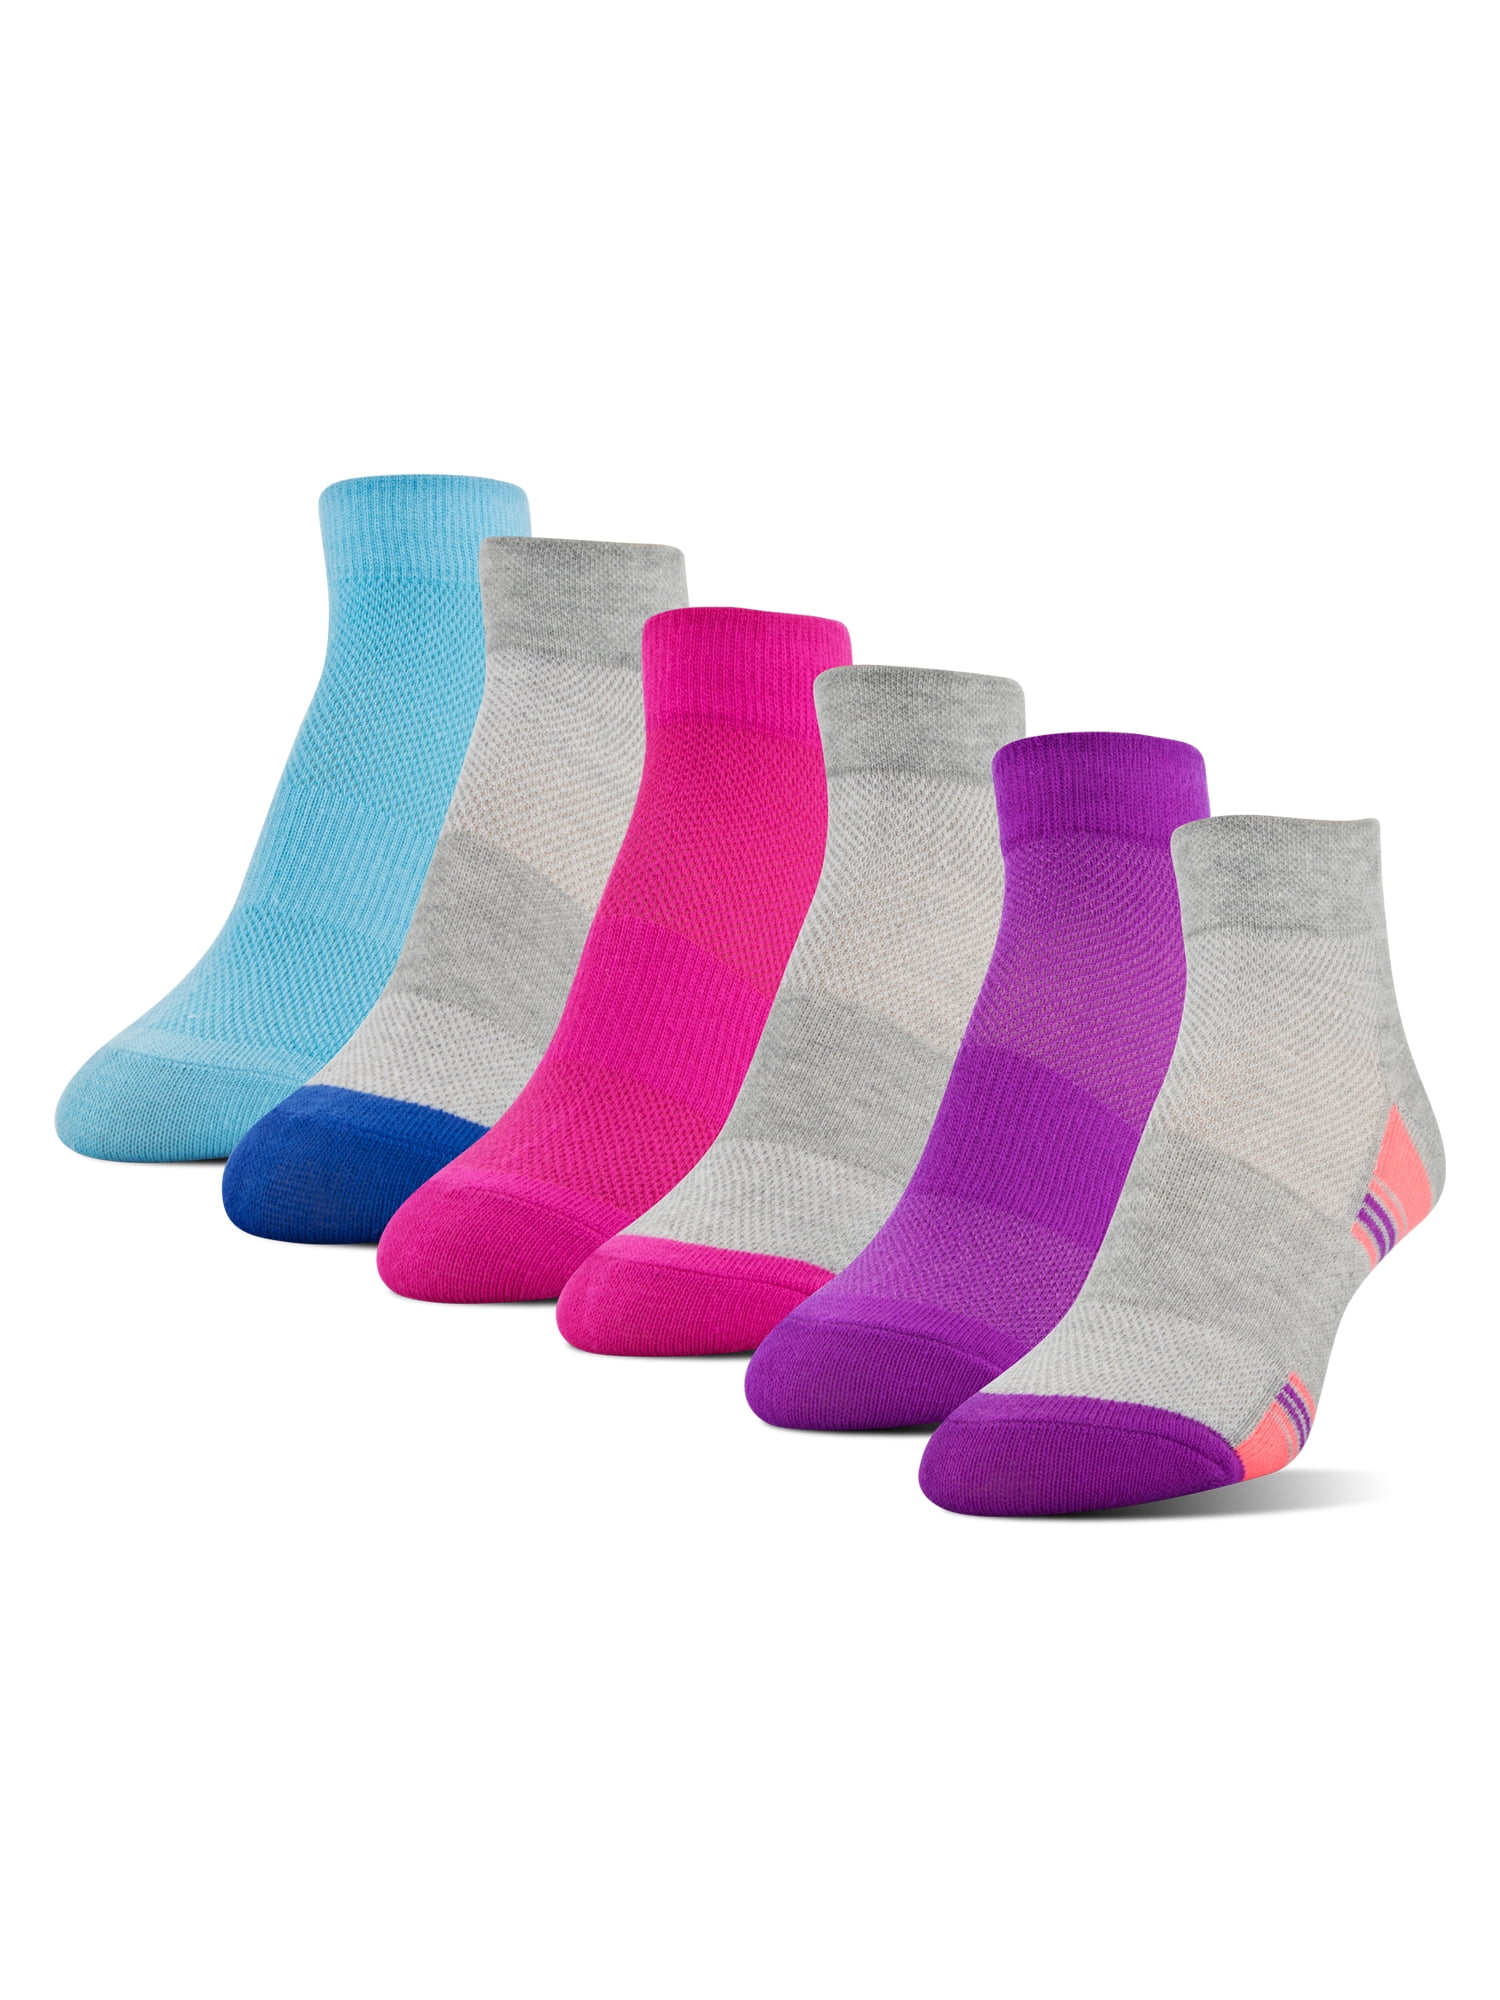 Athletic Works Women's Ultralite Low Cut Socks, 6 Pairs - Walmart.com